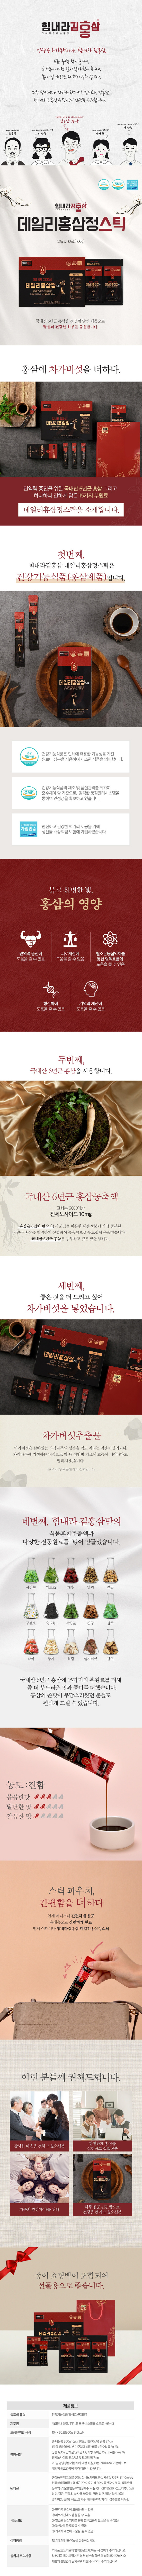 korea+red+cinseng+extract+daliy+stick_750.jpg